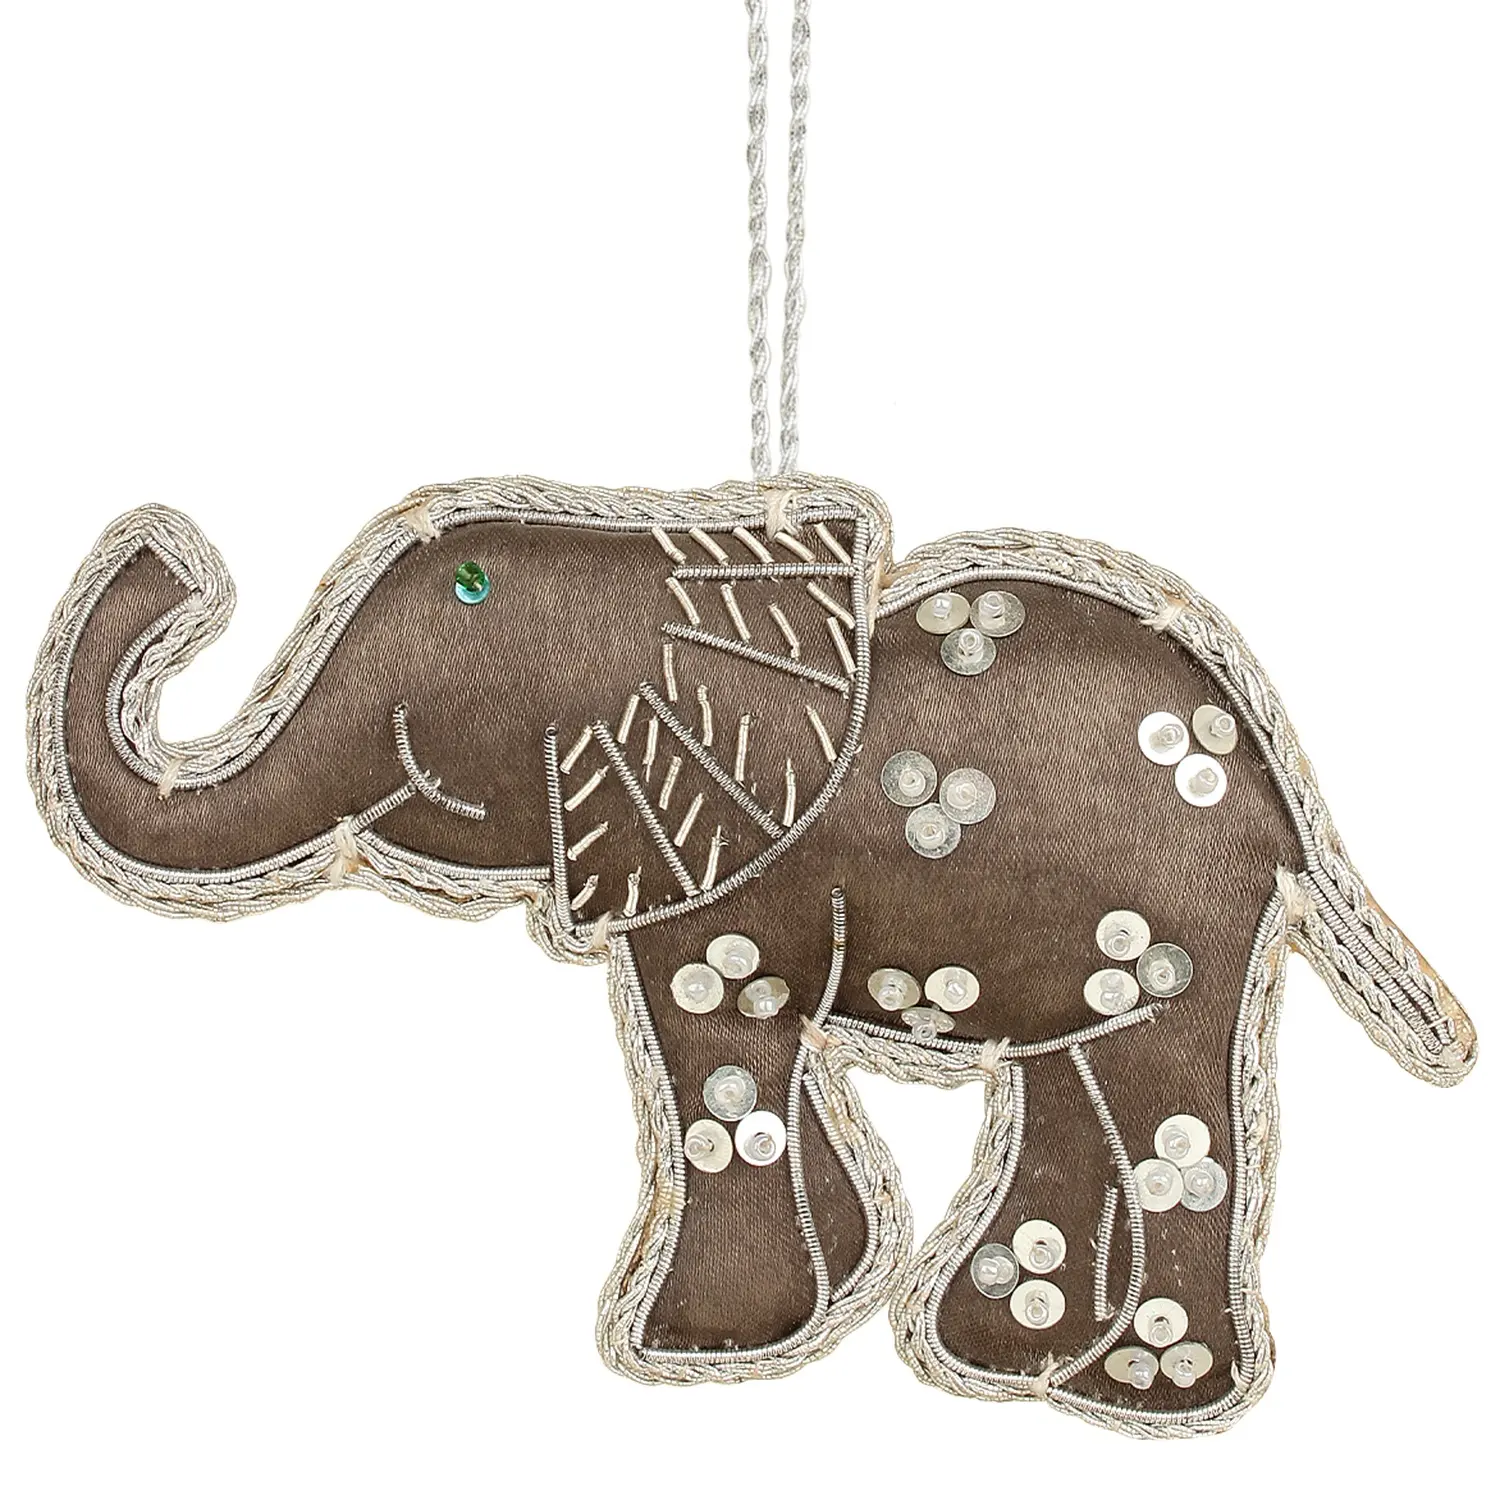 Handmade Handcrafted Embroidered Beaded Velvet satin Christmas Decorations Ornament Santa Socks Giraffe Elephant Customized